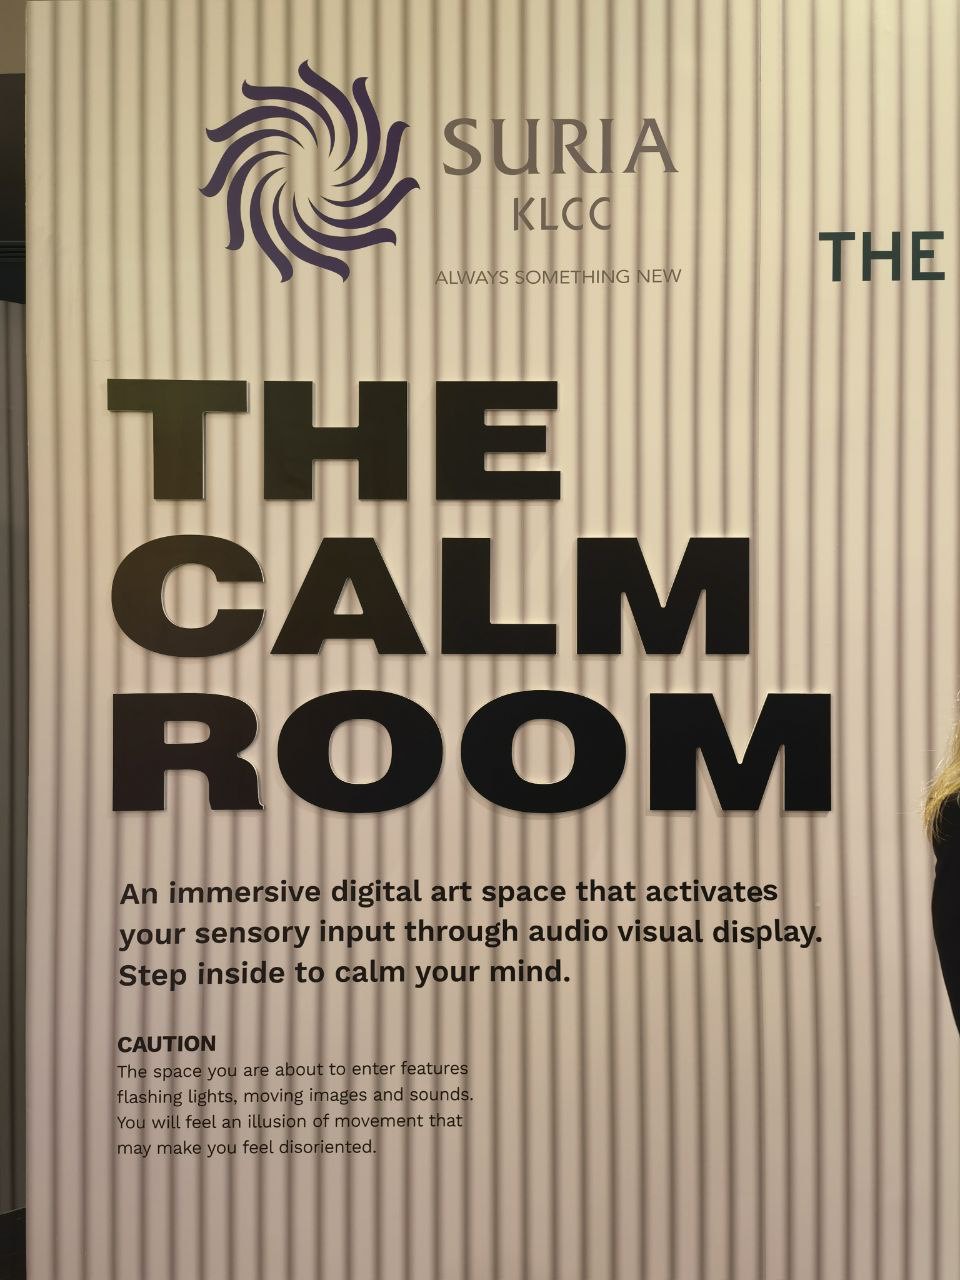 The Calm Room at SAFE SPACE @ suria klcc